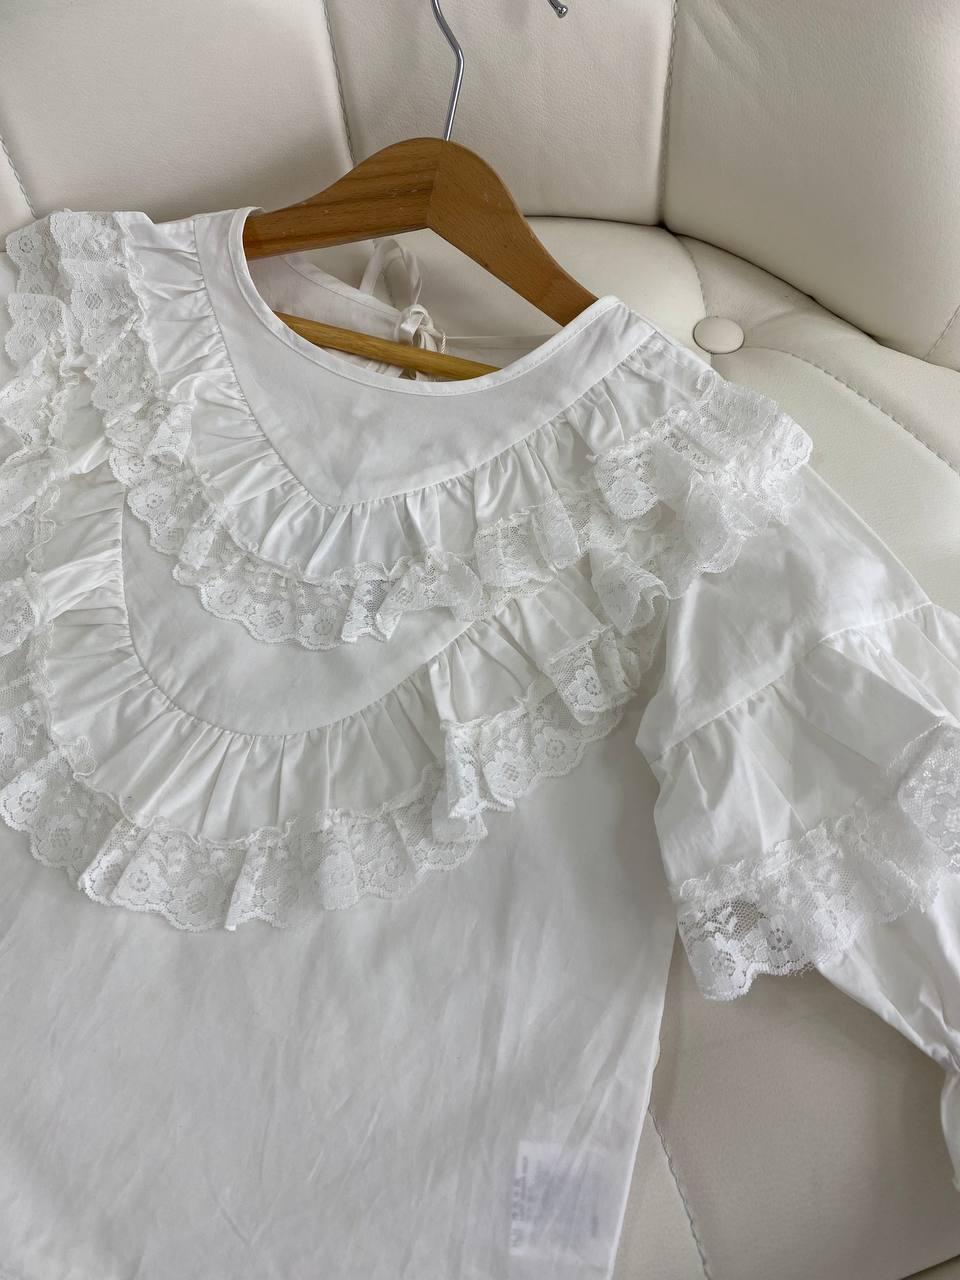 Нарядна біла шкільна блузка з рюшами GS-8051 34, Белый, Девочка, Лето, 110 см, 5 лет